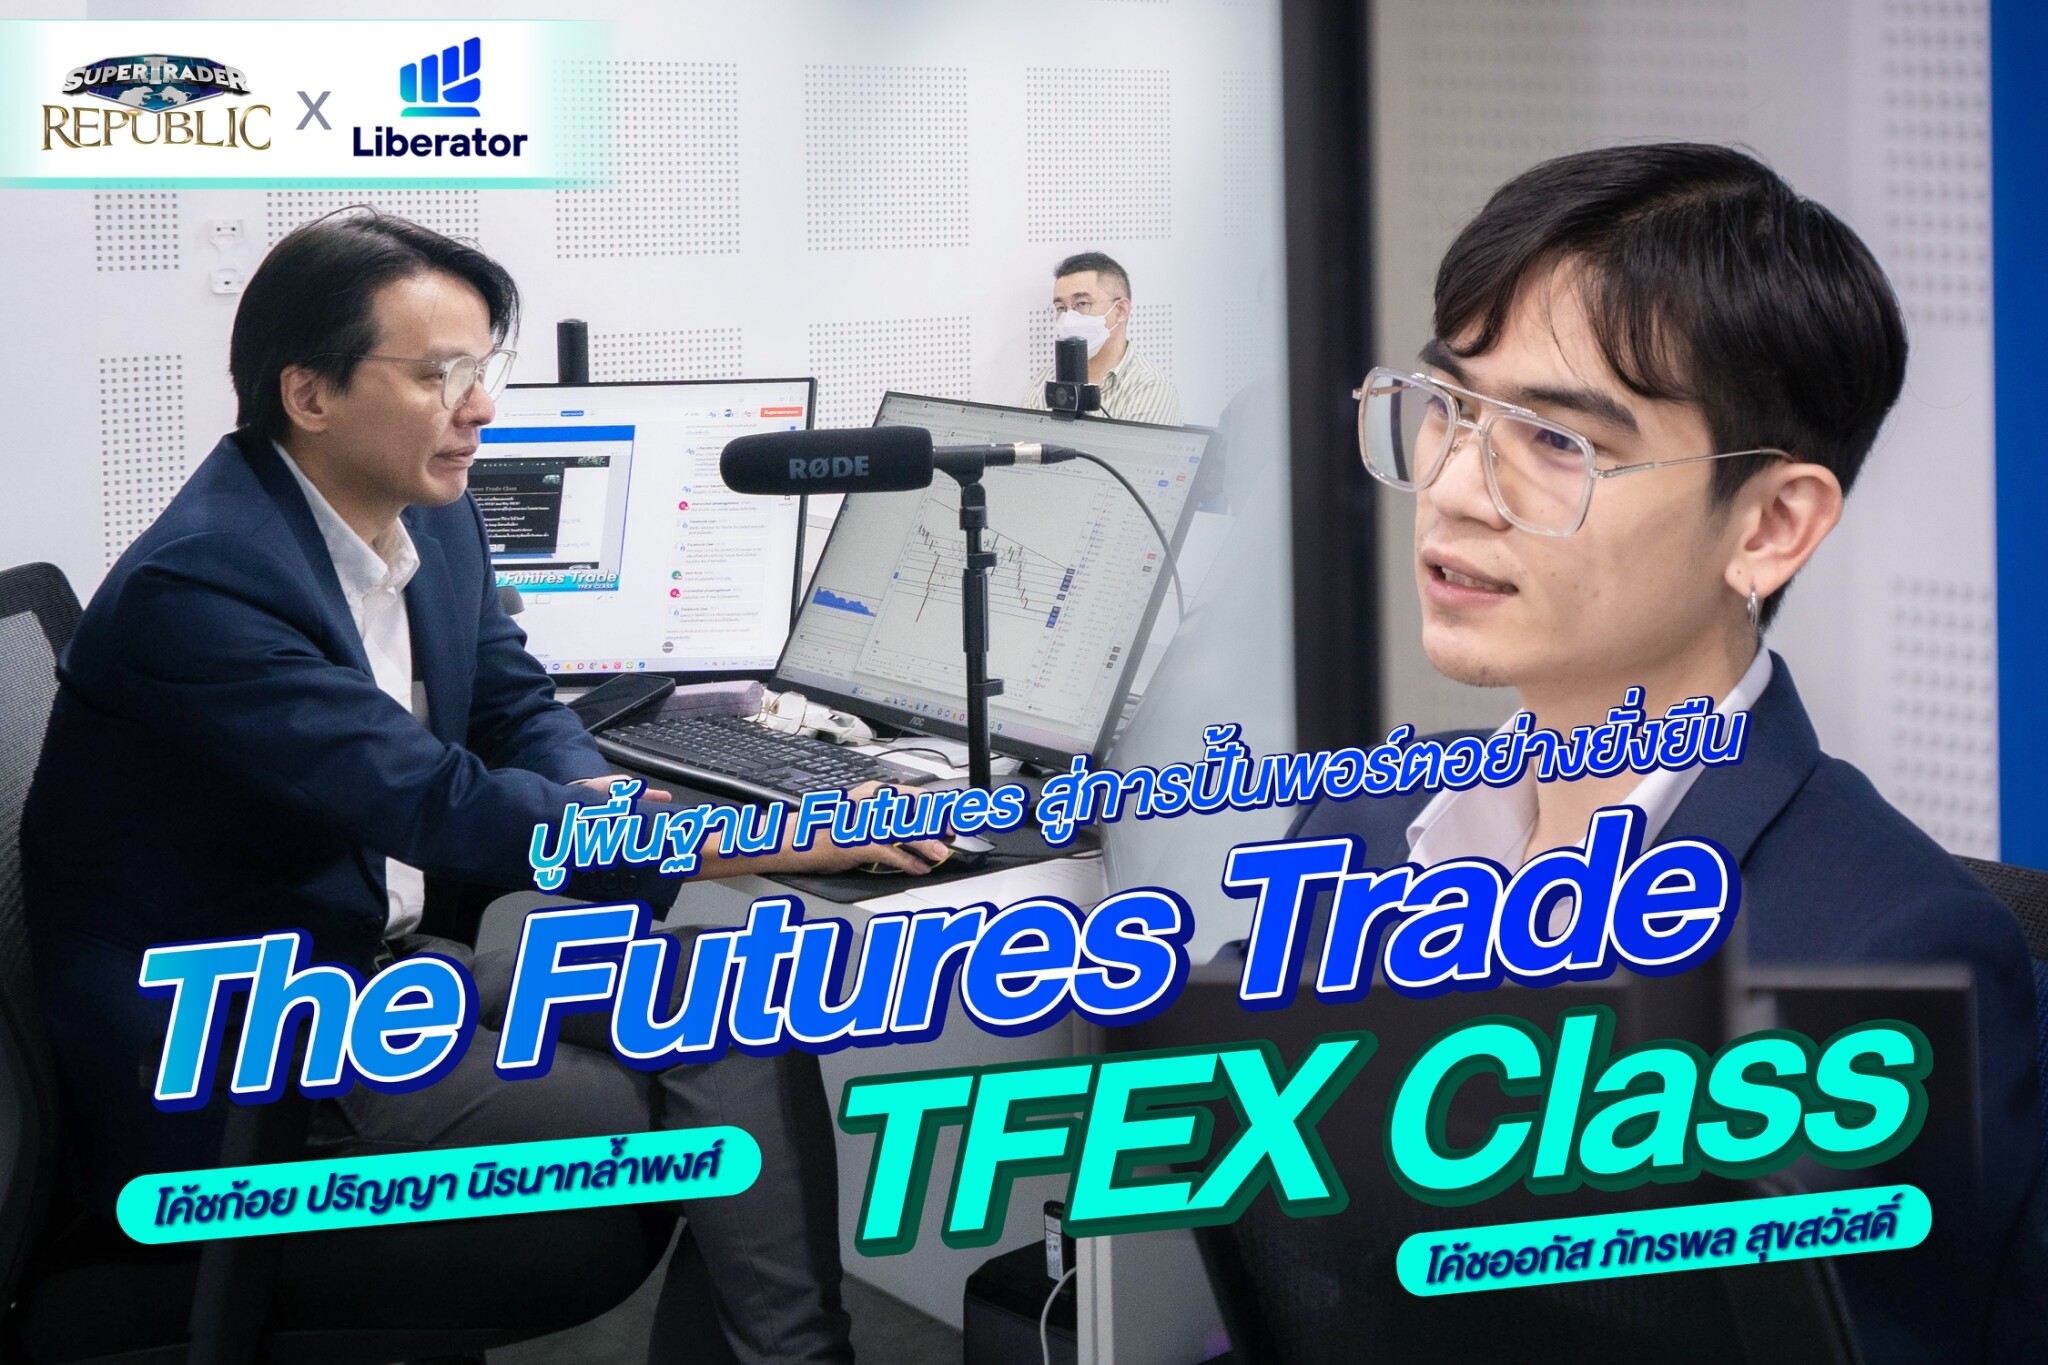 Liberator จับมือ "Super Trader" จัดกิจกรรม "The Futures Trade Class" สอนเทรด TFEX ฟรีครั้งแรก! ปูทางสู่ Liberator Academy เสิร์ฟความรู้ดีๆ ต่อเนื่อง